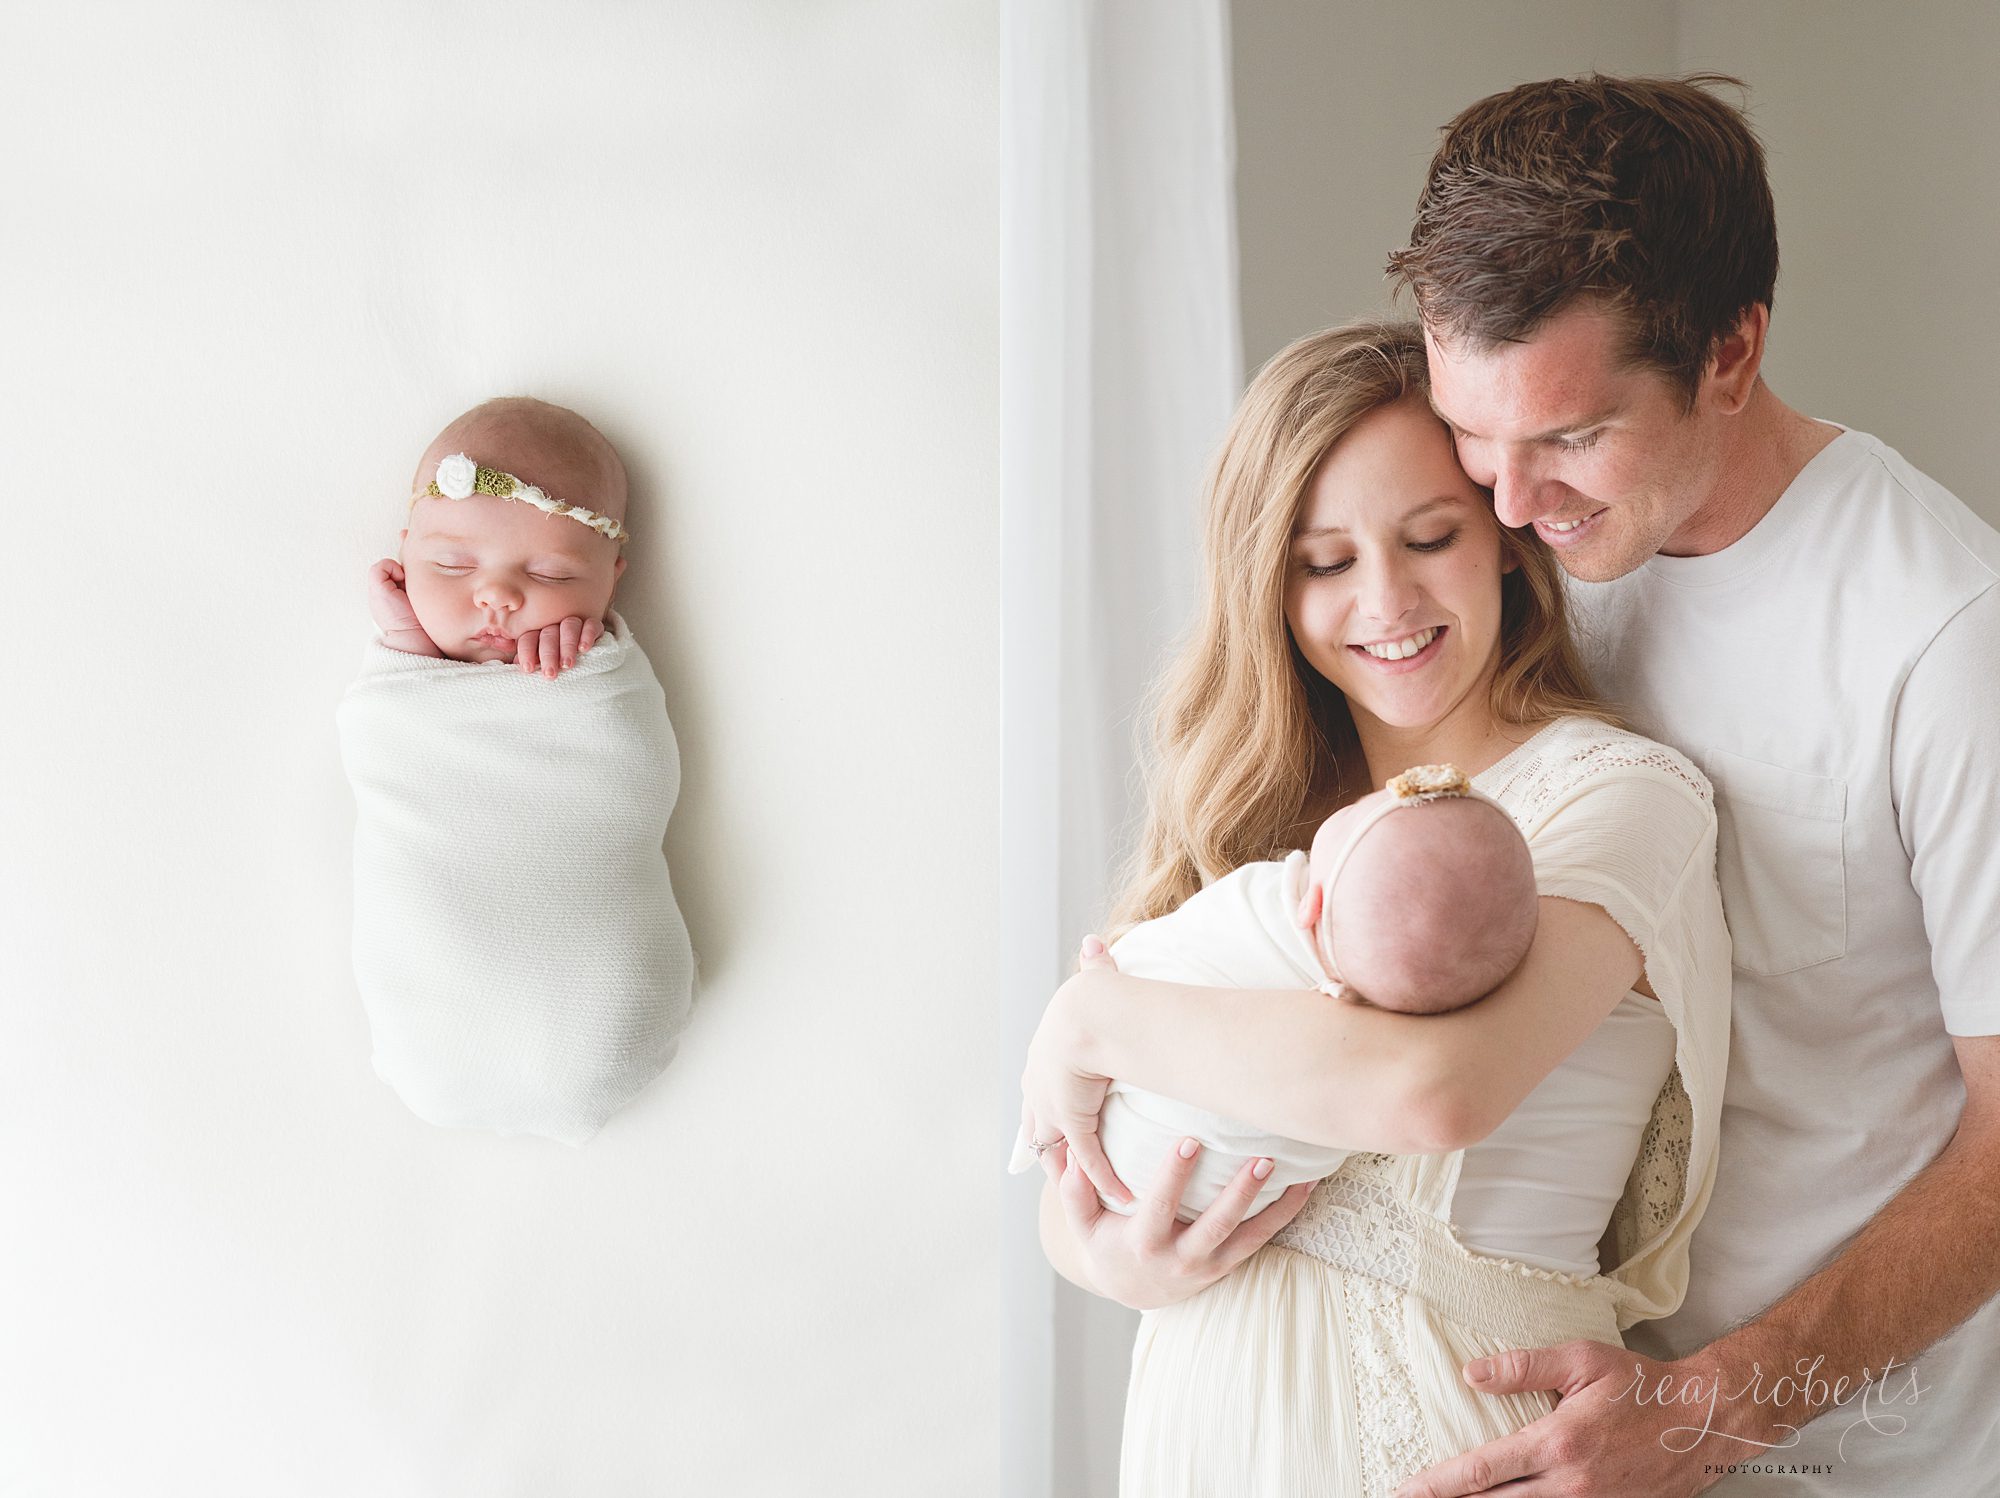 Chandler newborn photographer | Reaj Roberts Photography